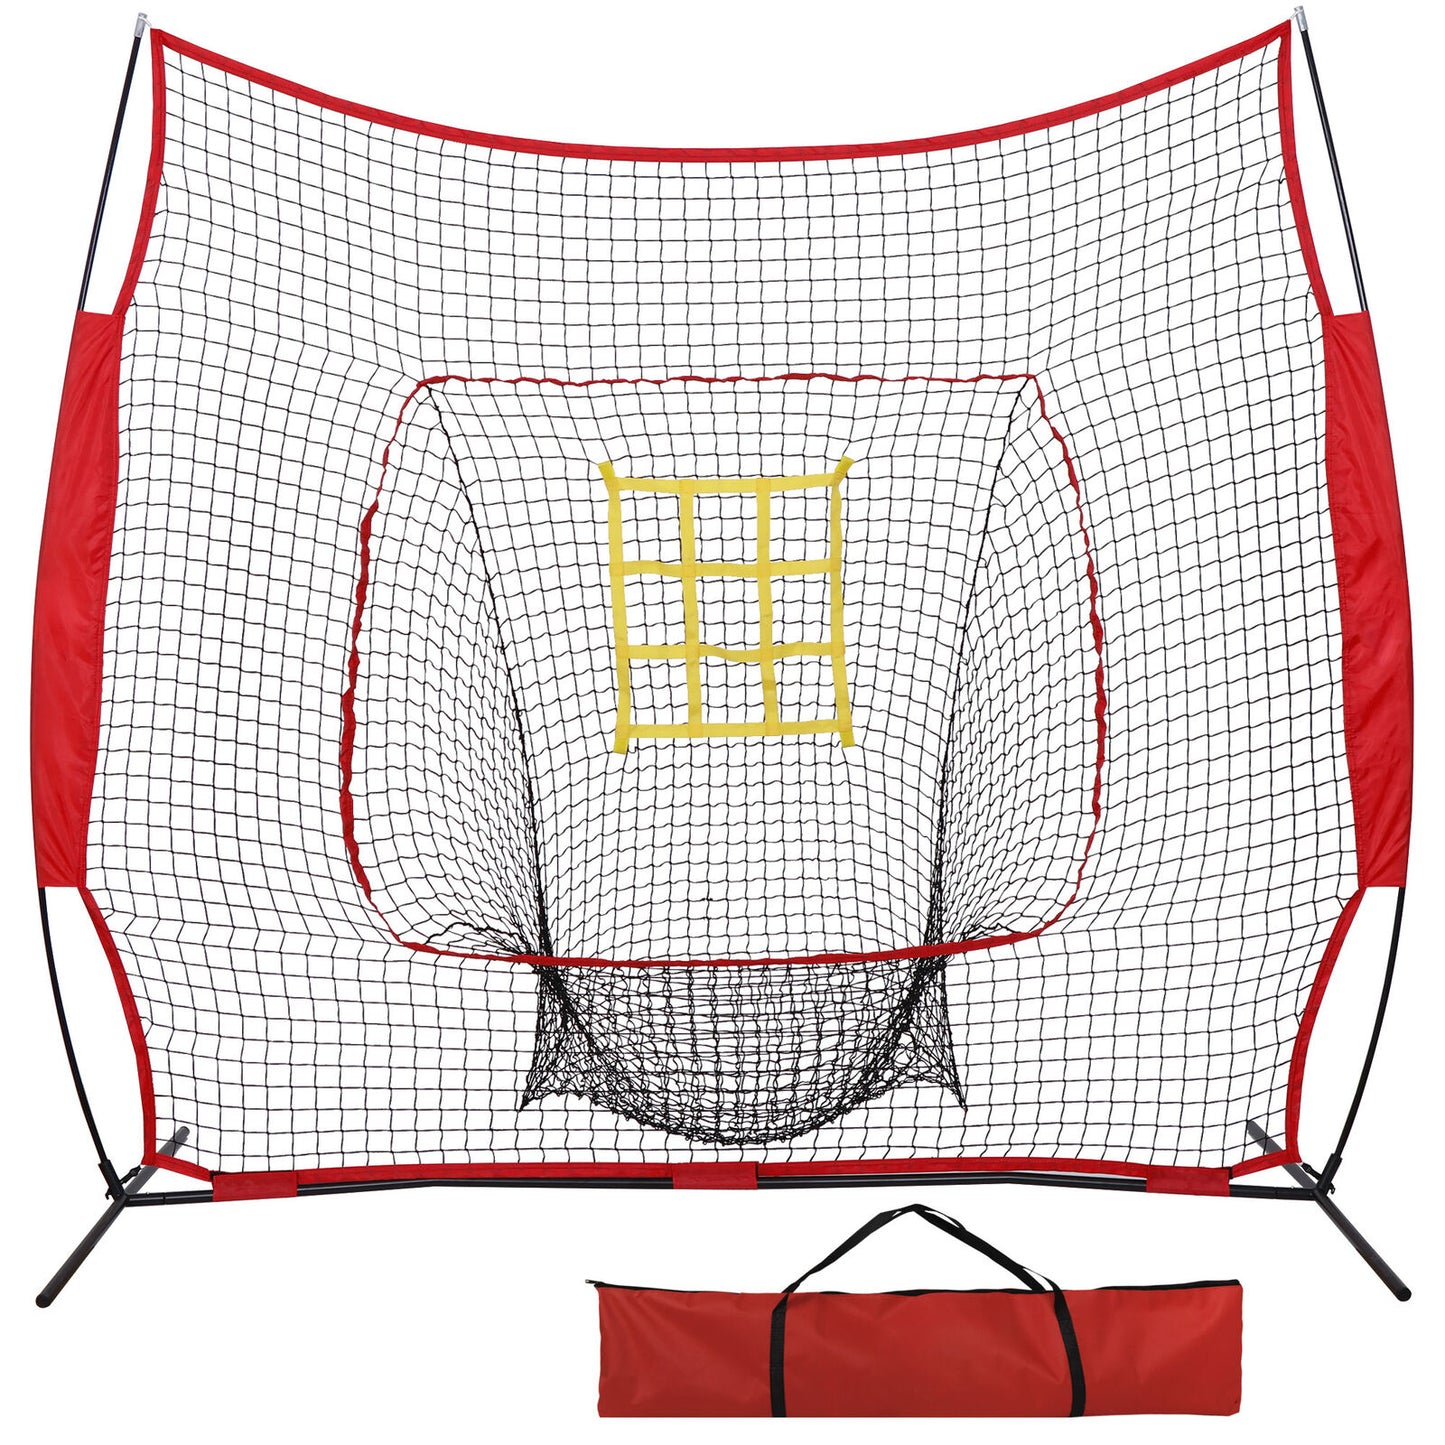 7'×7' Baseball Net Softball Practice Batting Hitting Net Upgraded Strike Zone